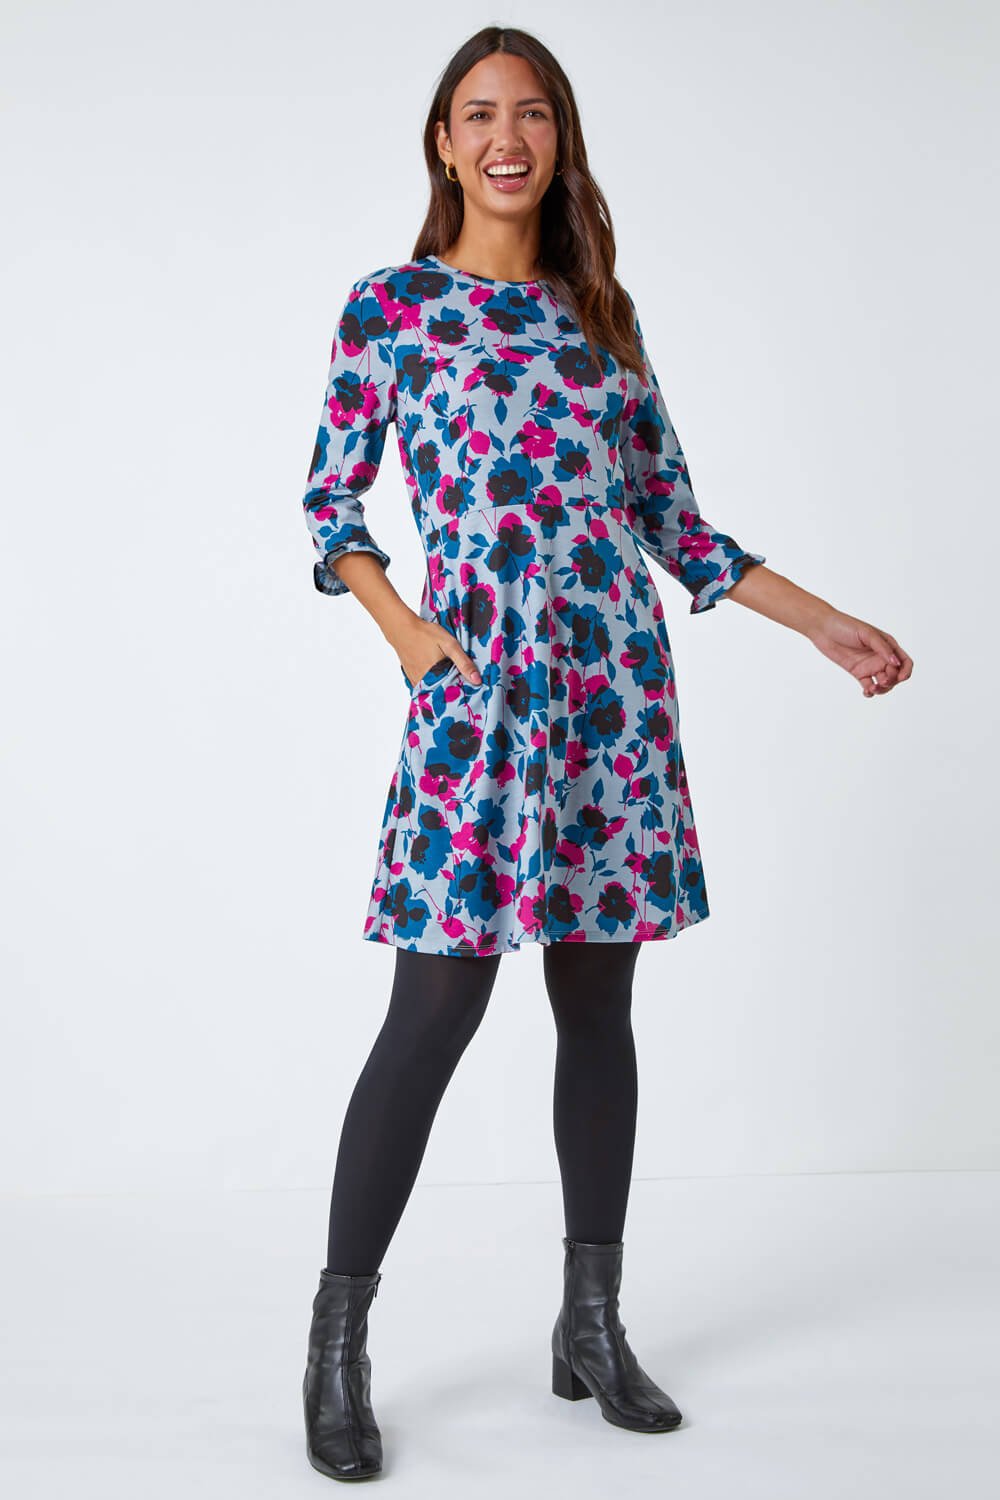 Teal Floral Print Frill Sleeve Stretch Dress | Roman UK